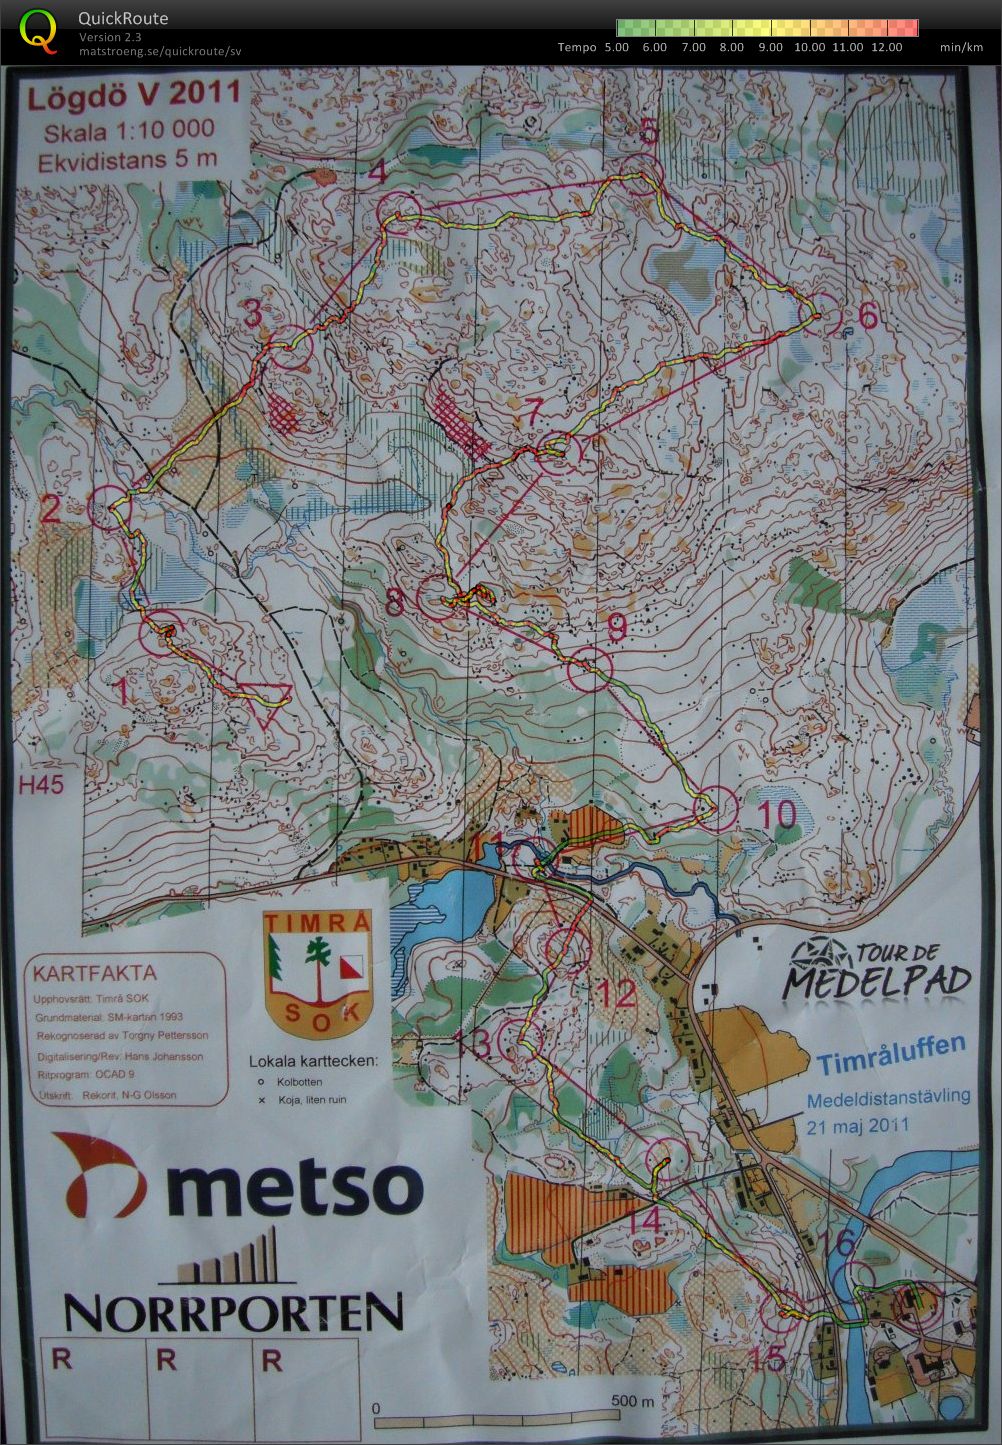 Tour de Medelpad II (21.05.2011)